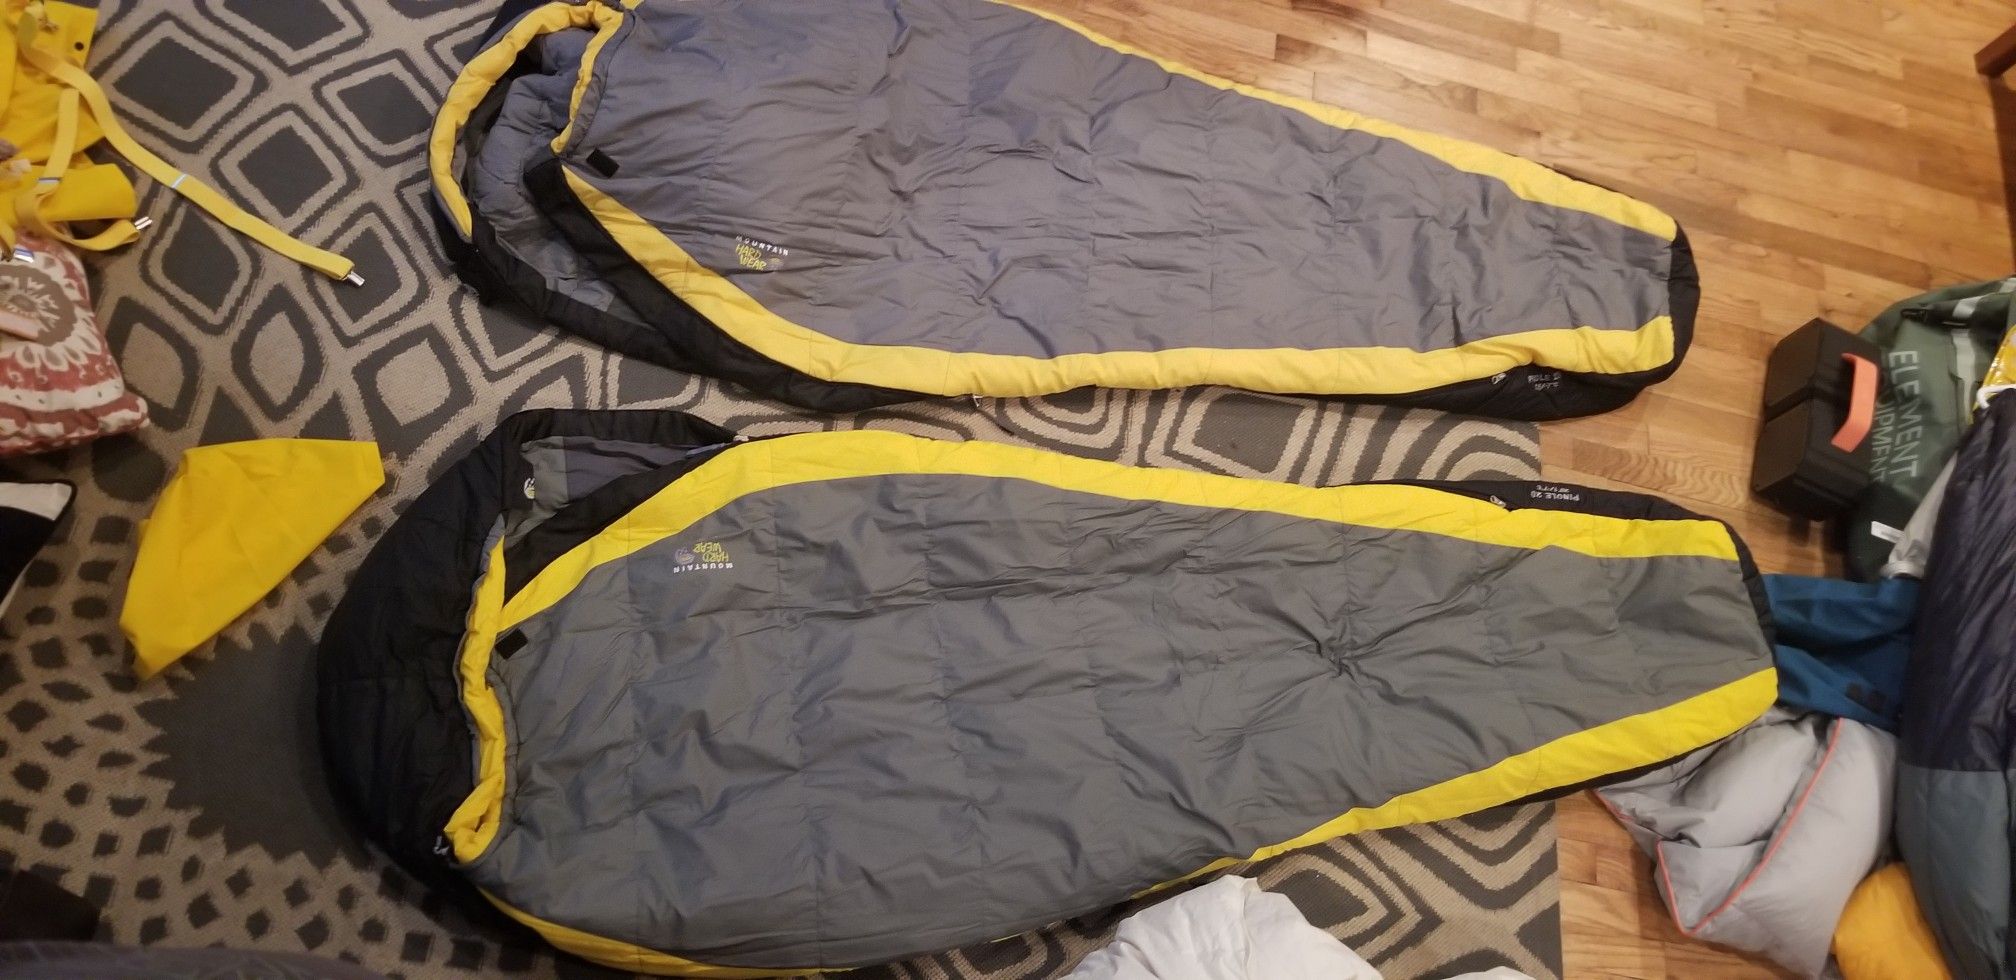 2x Mountain Hardware Sleeping Bags